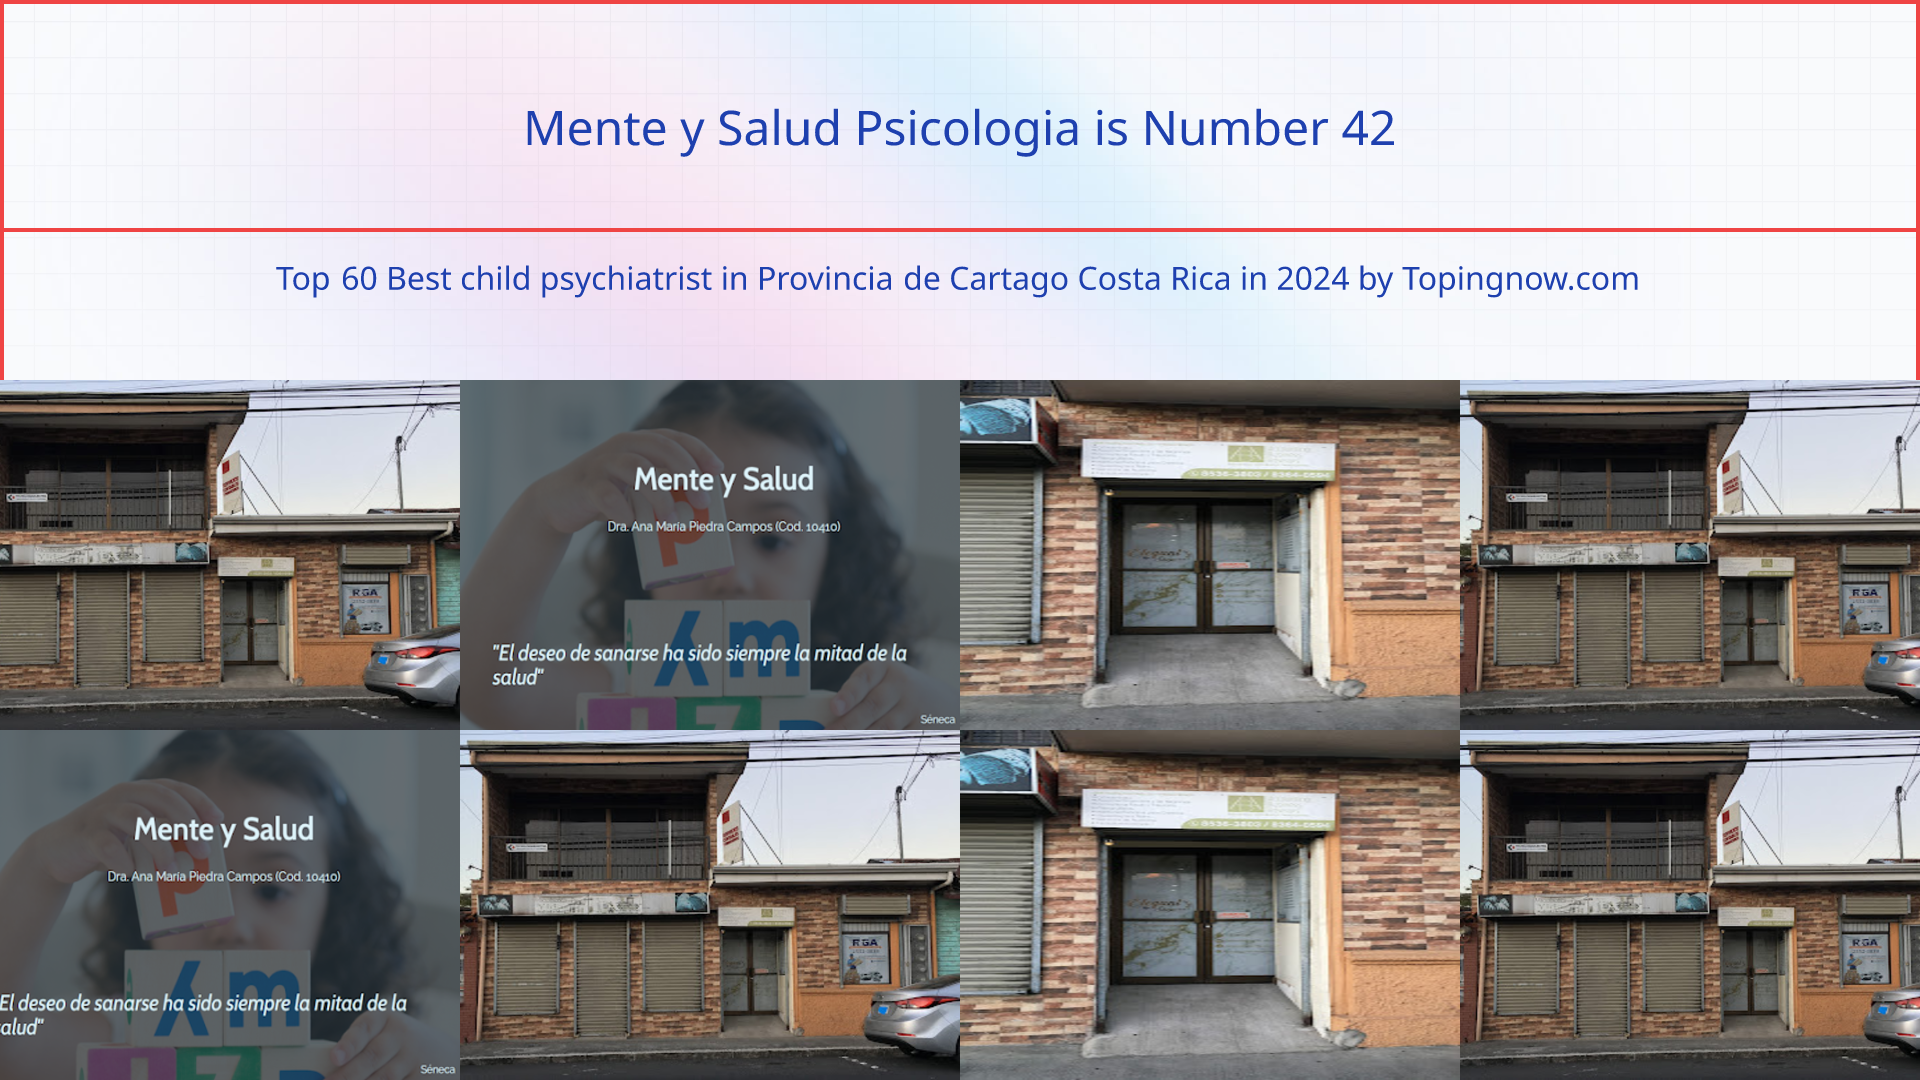 Mente y Salud Psicologia: Top 60 Best child psychiatrist in Provincia de Cartago Costa Rica in 2024